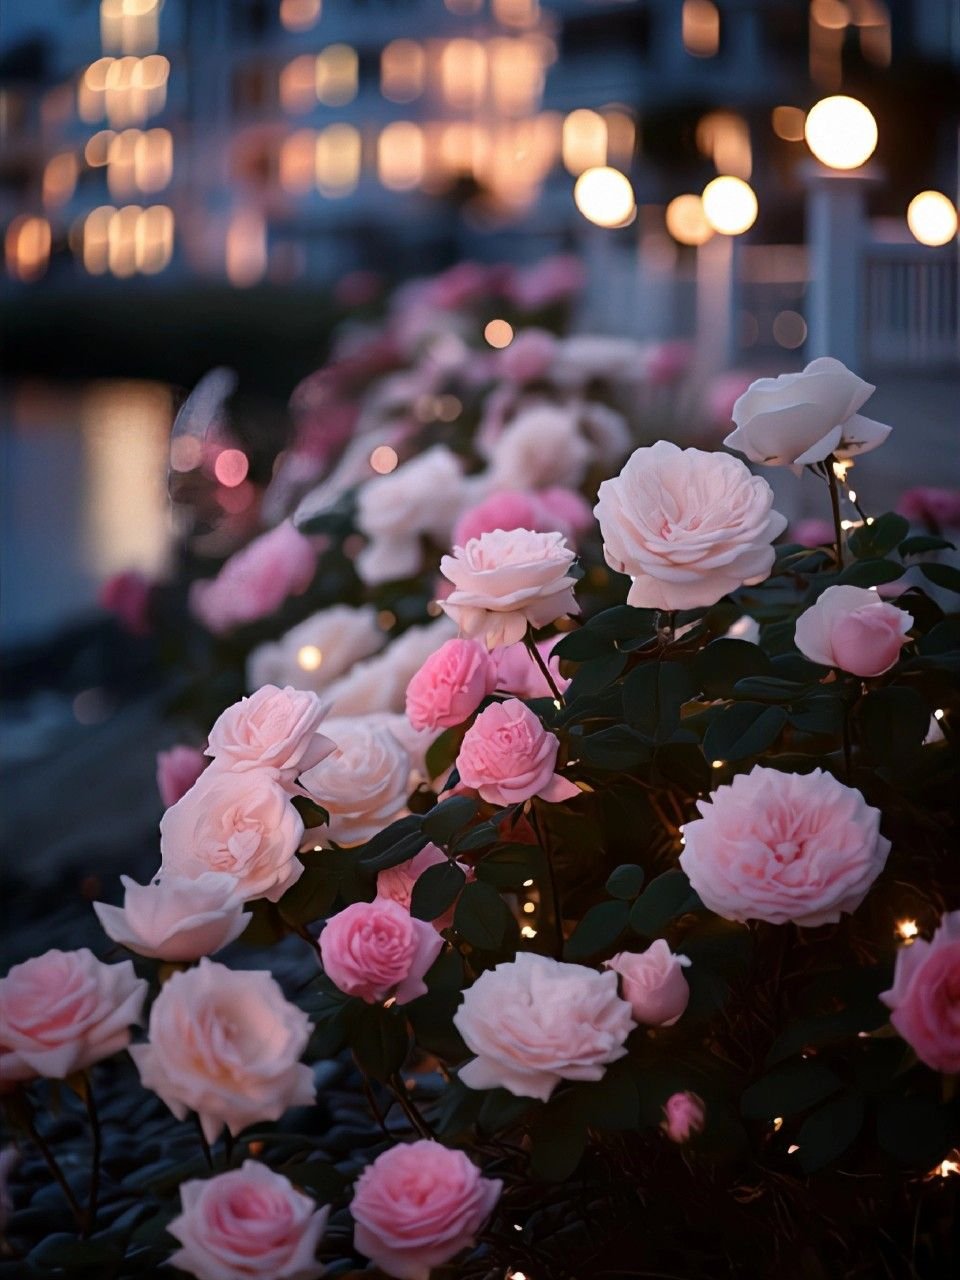 Cute Rose Flowers DP